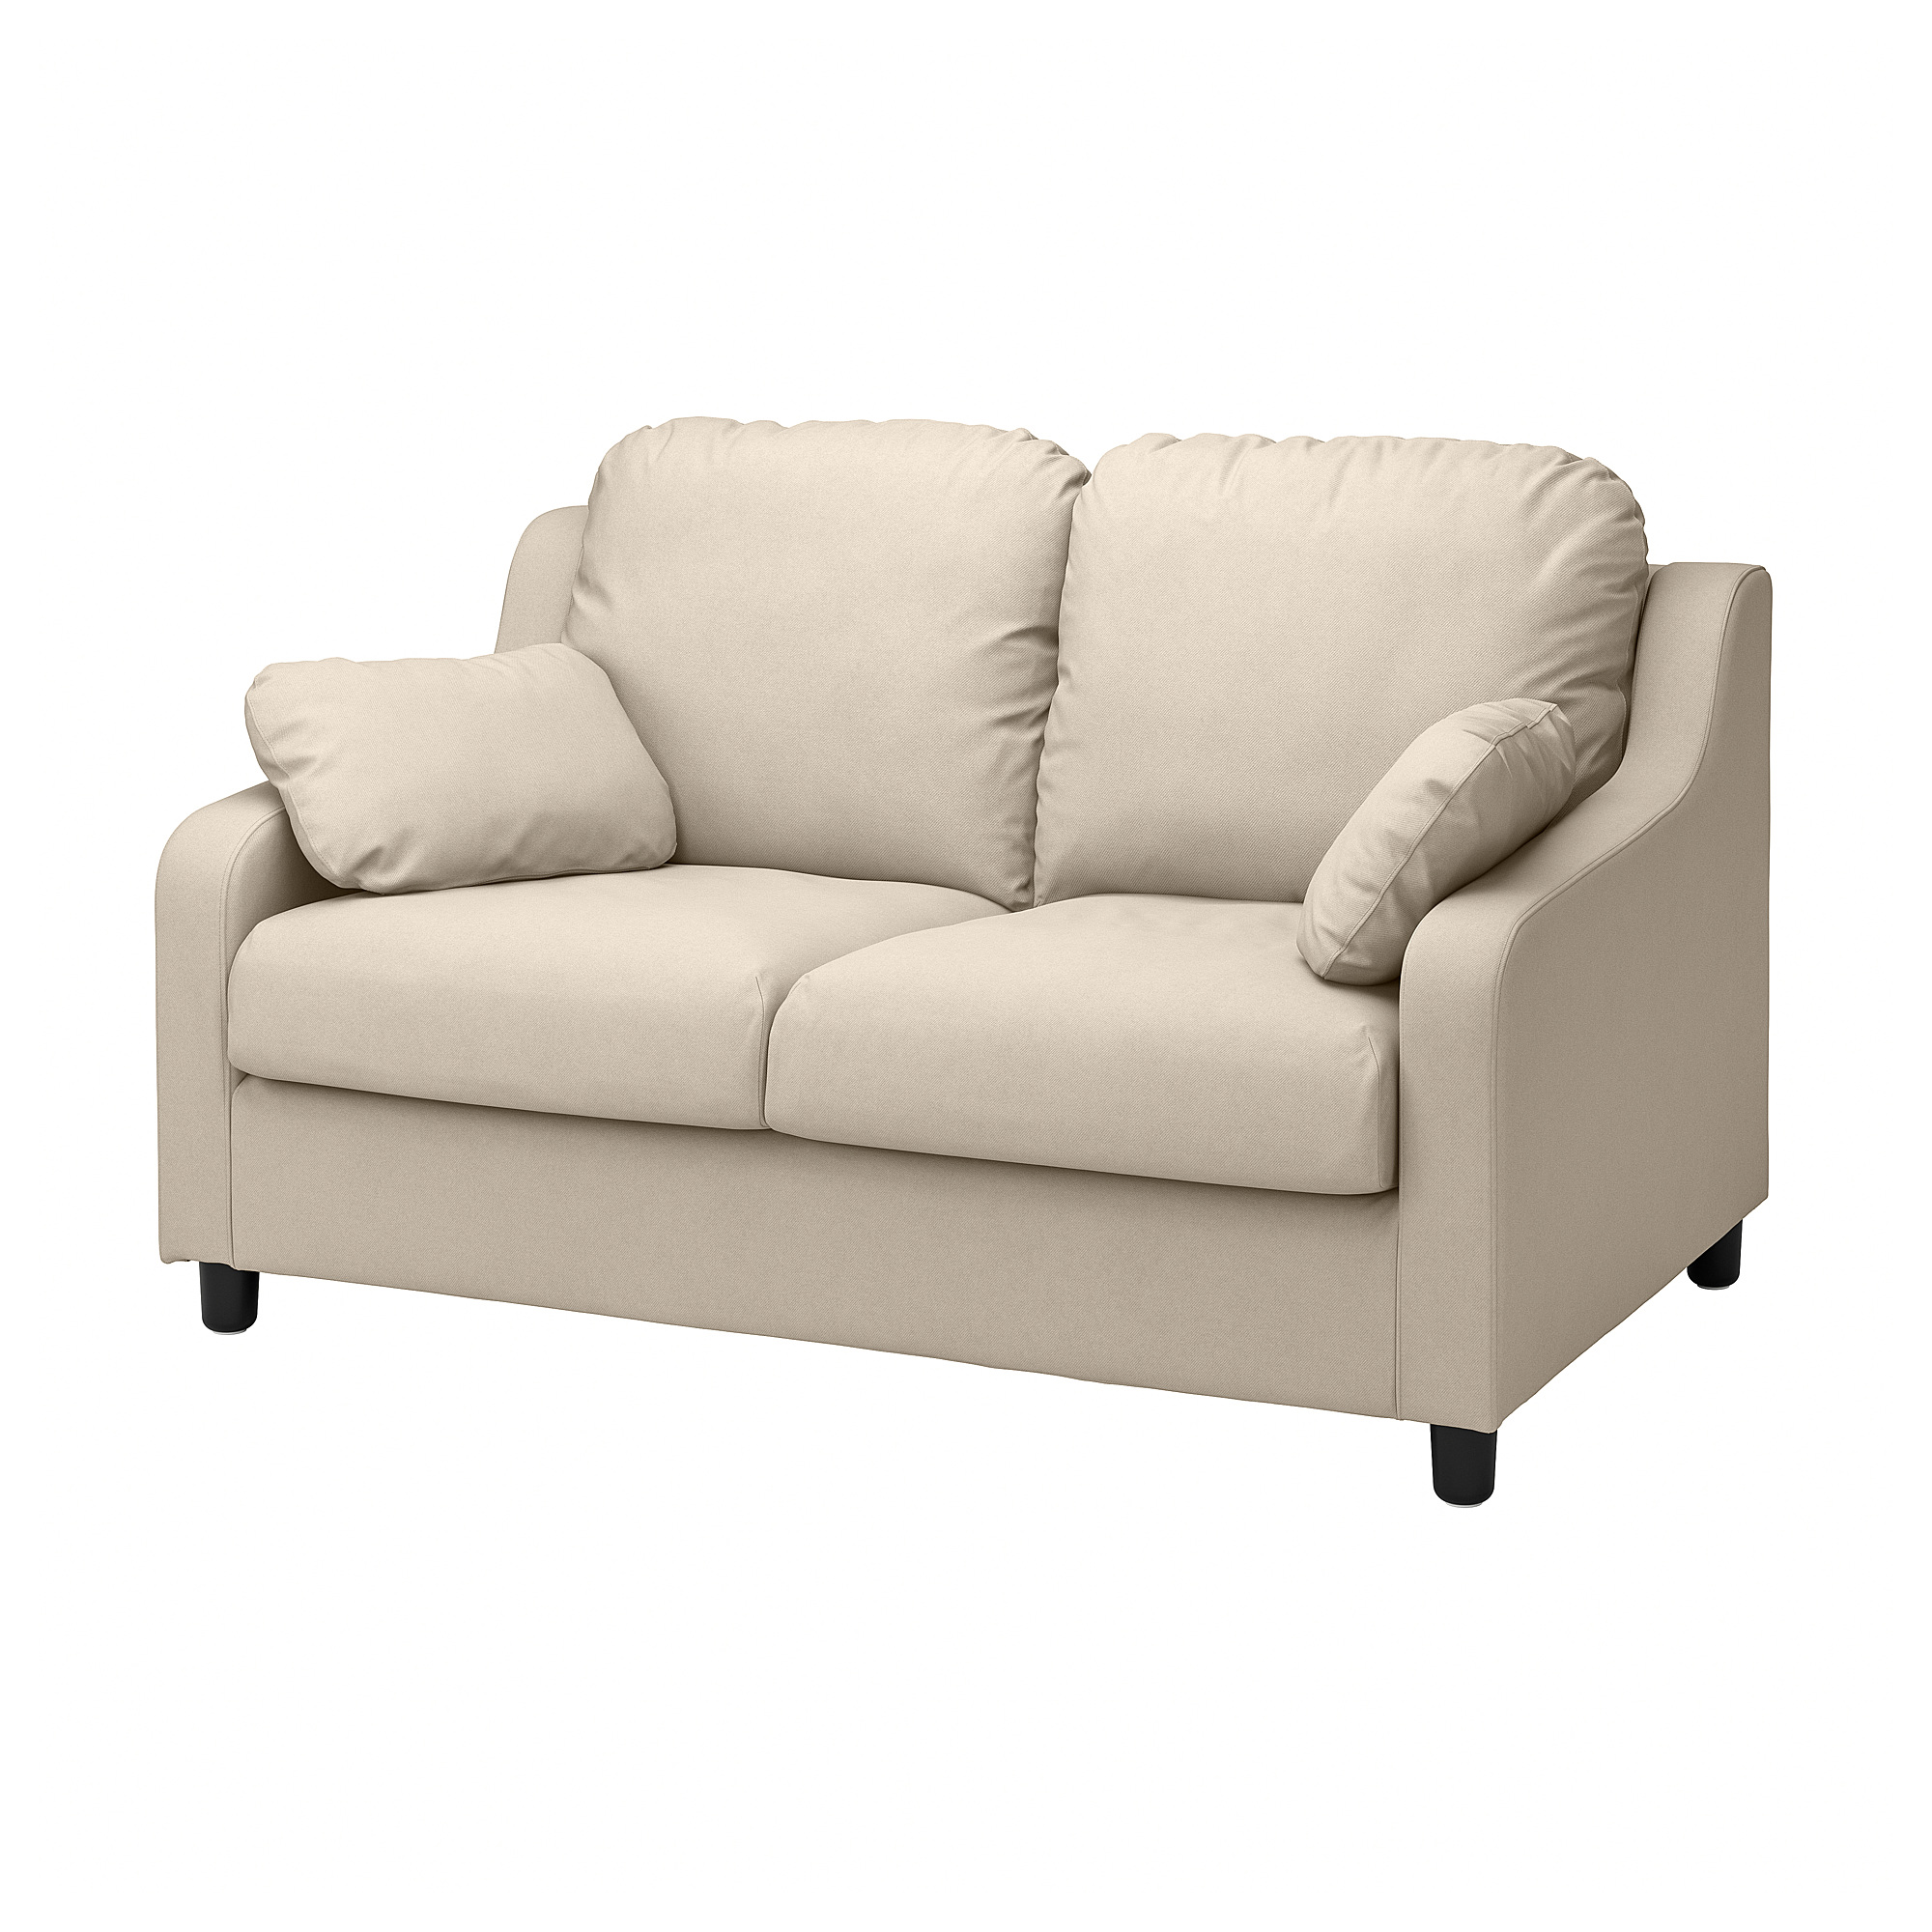 VINLIDEN cover for 2-seat sofa